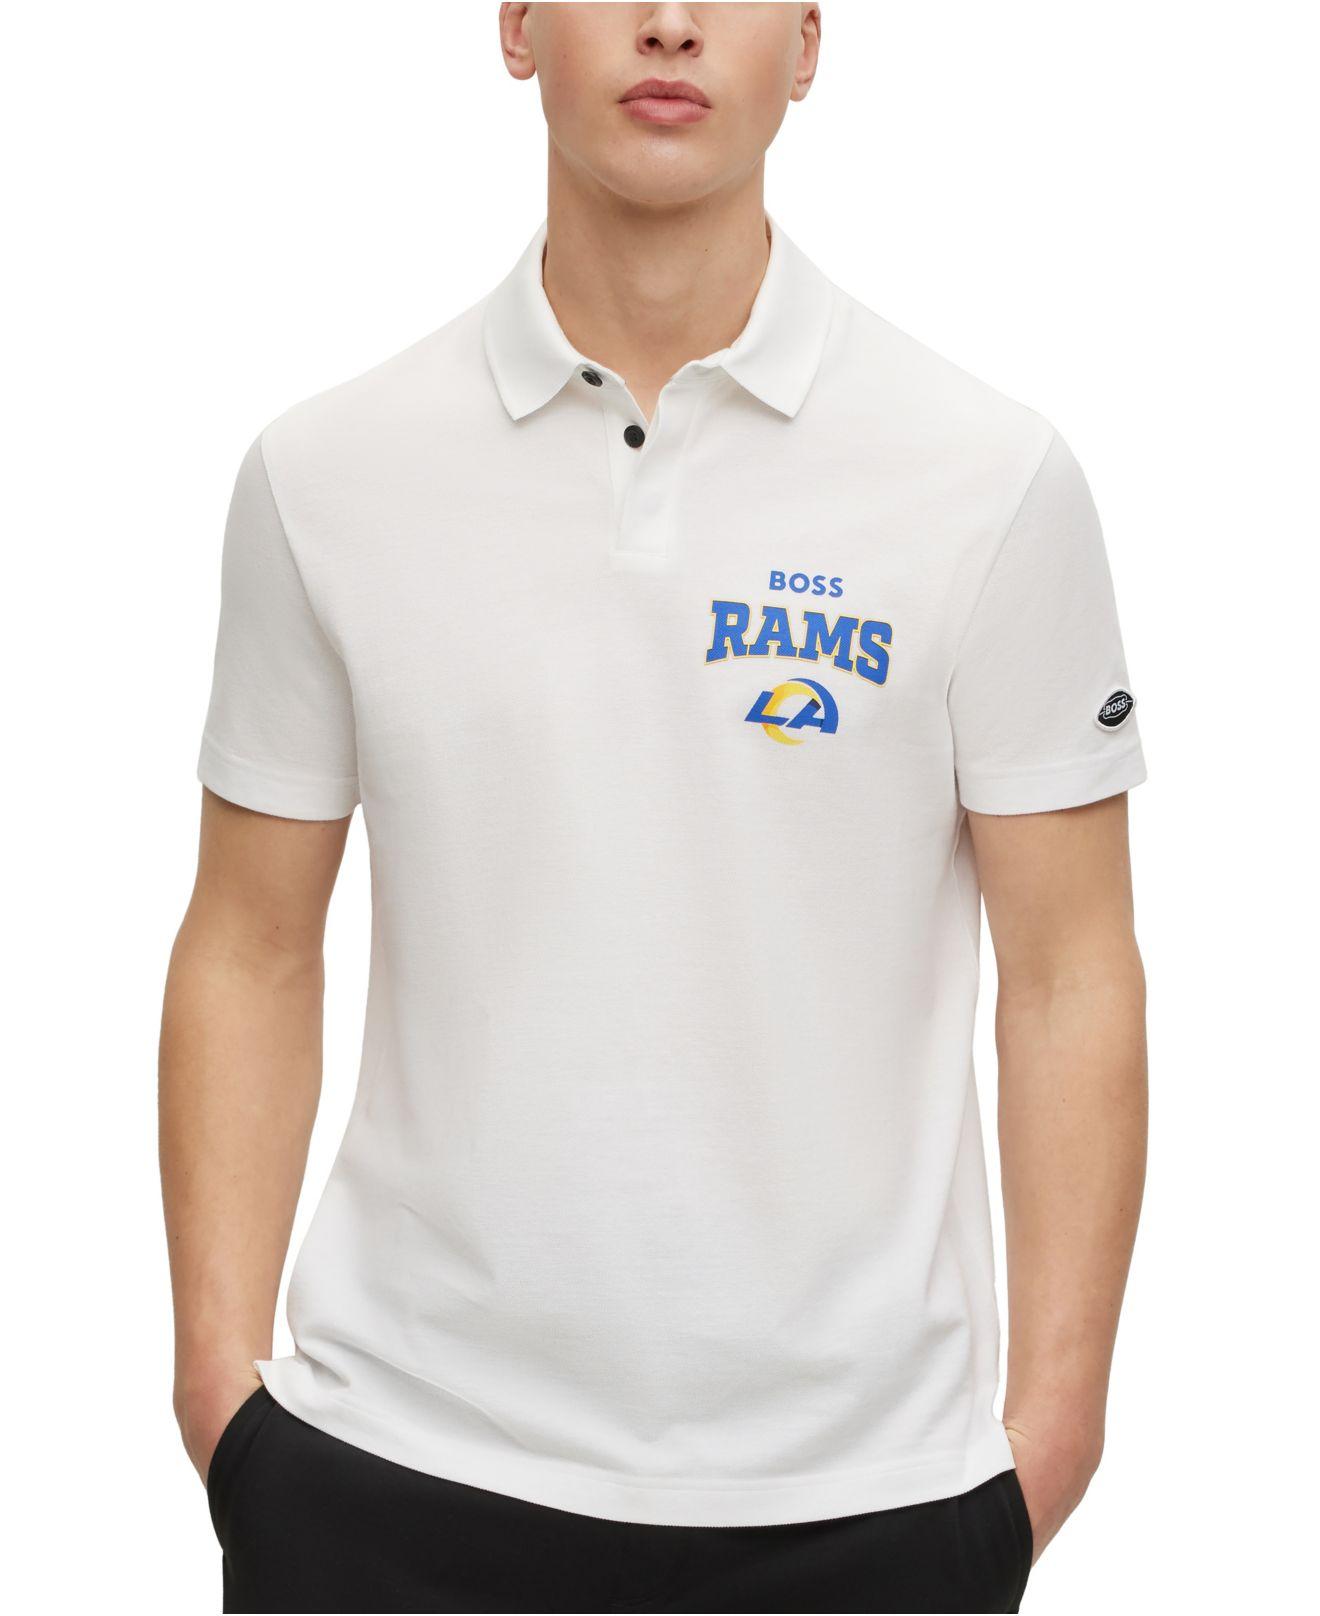 BOSS by HUGO BOSS Los Angeles Rams Polo Shirt in White for Men